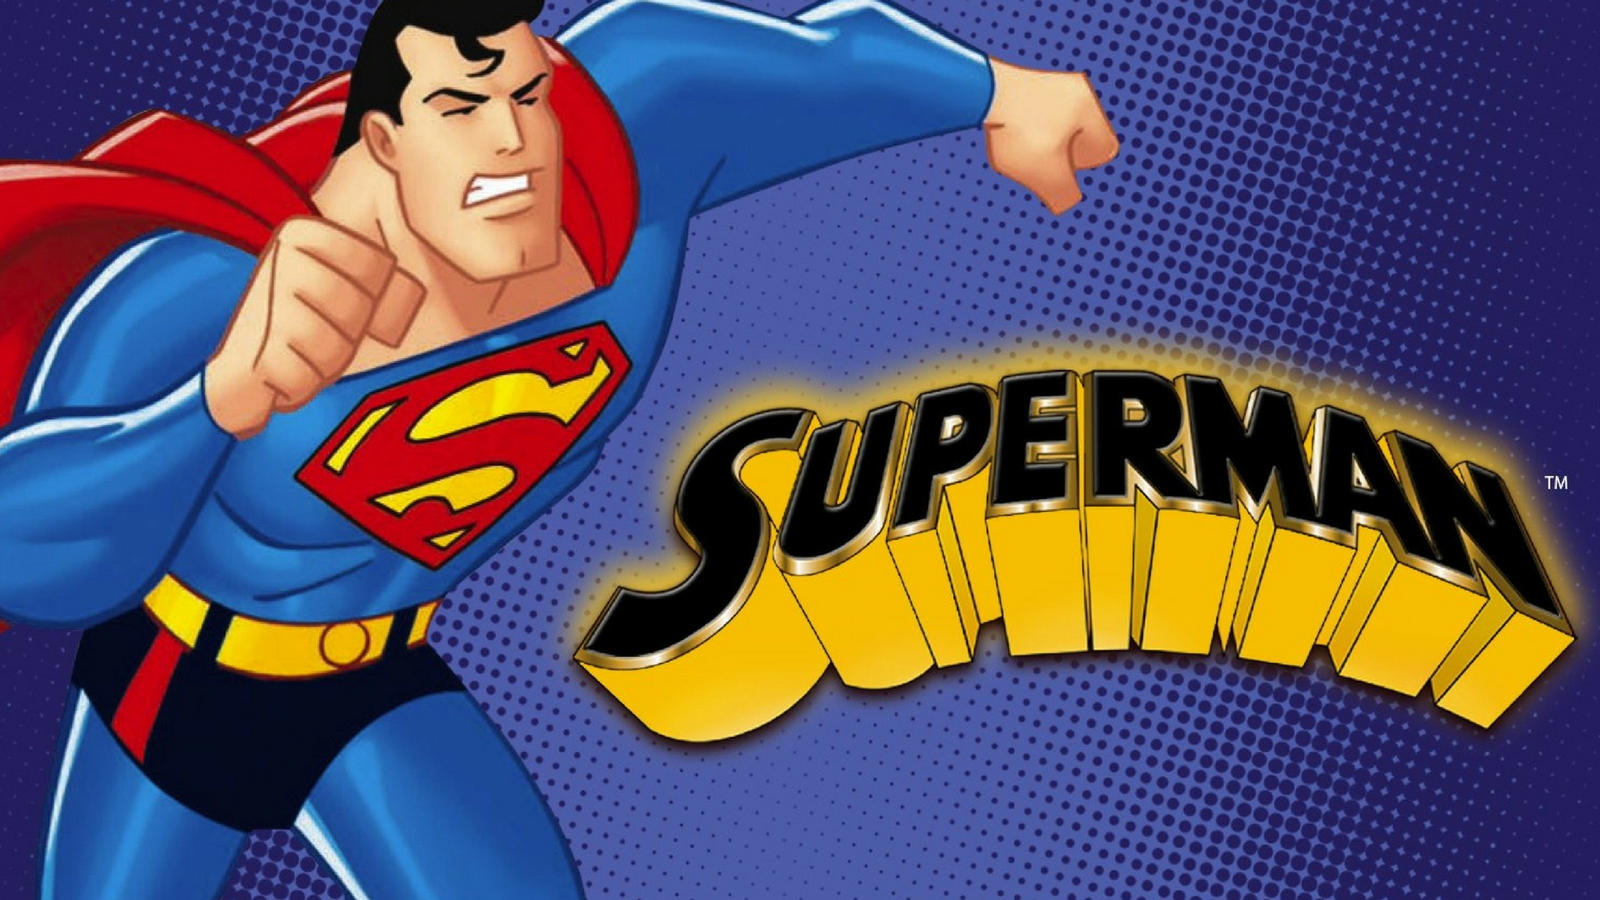 Superman The Animated Series Wallpaper 1 by JMarvelhero on DeviantArt